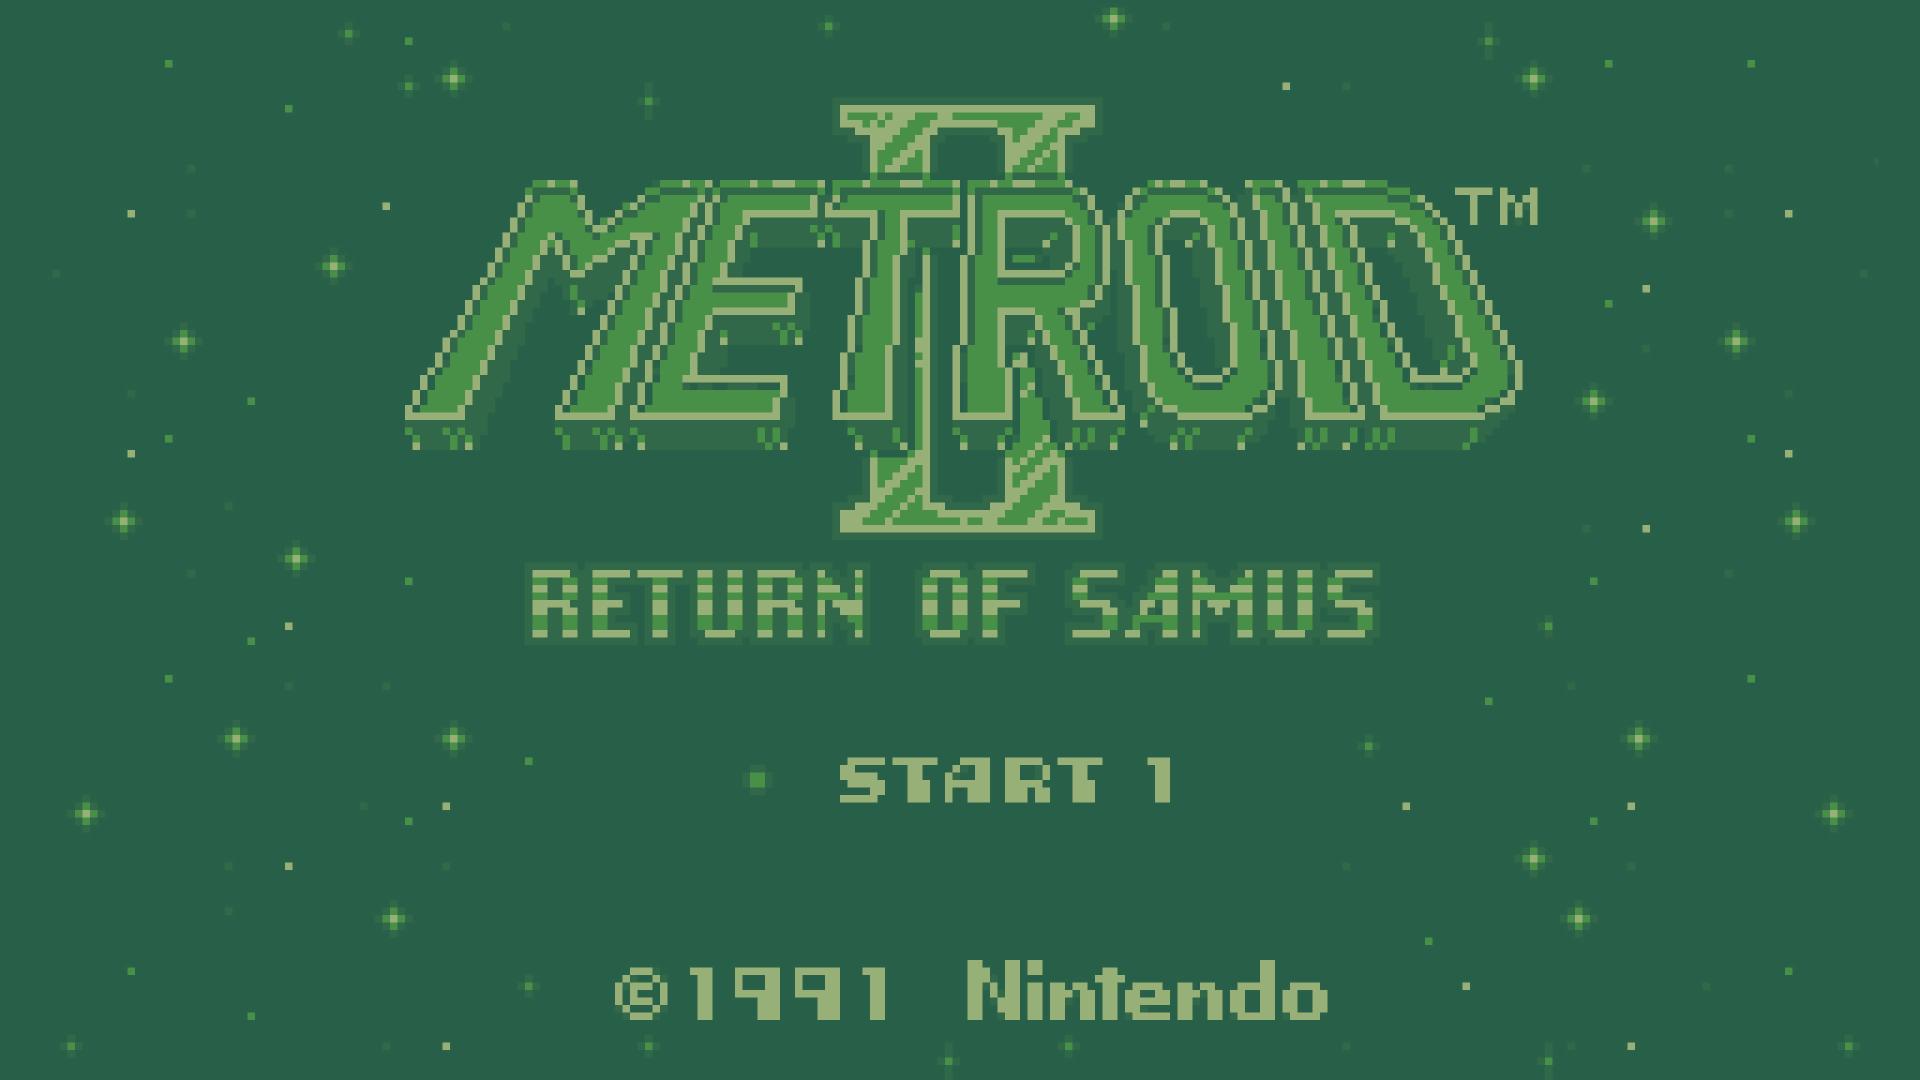 Metroid II Return Of Samus at 1024 x 1024 iPad size wallpapers HD quality